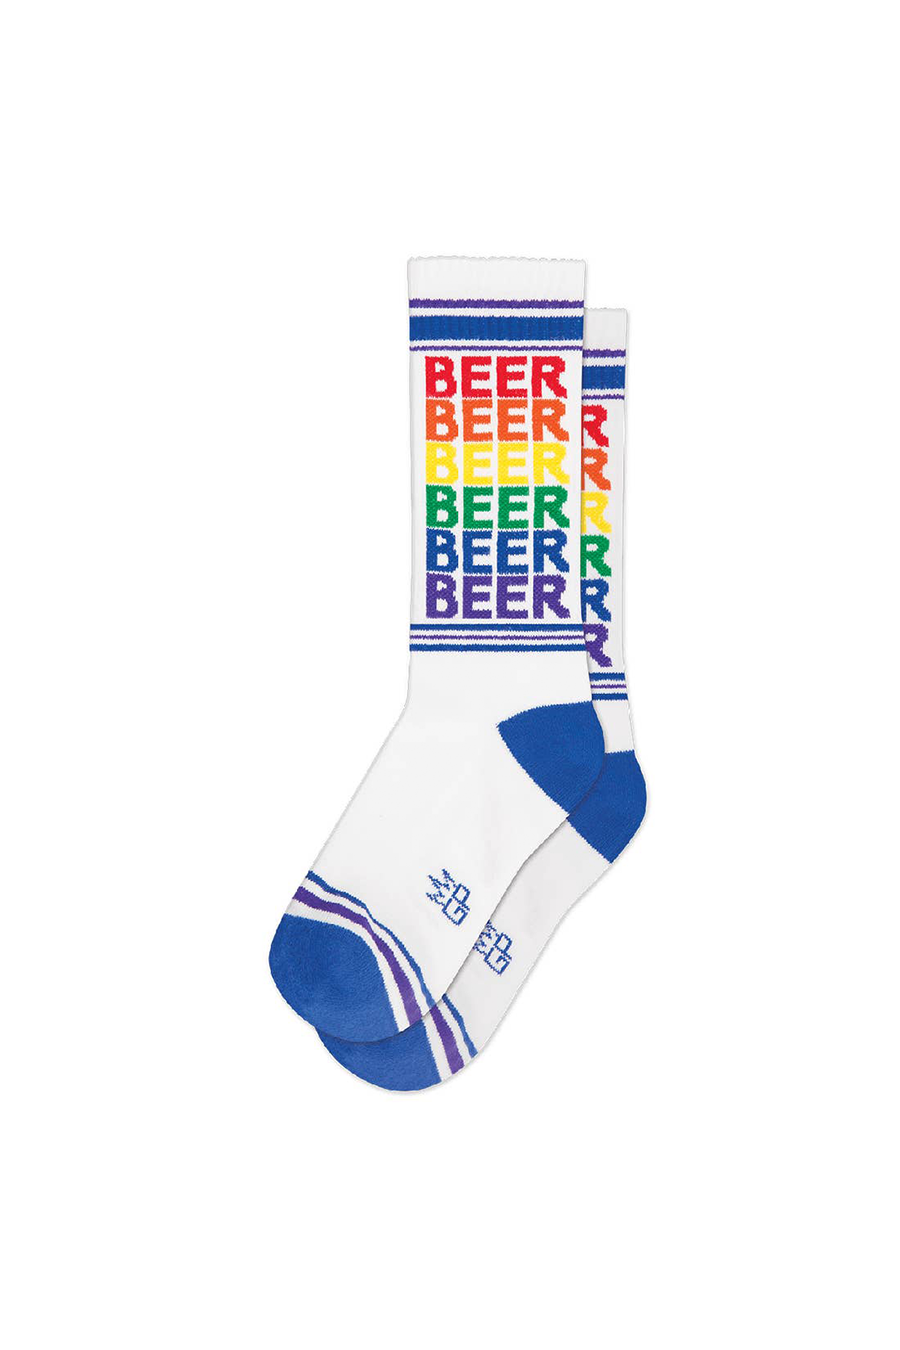 Beer Rainbow Gym Sock - Main Image Number 1 of 1